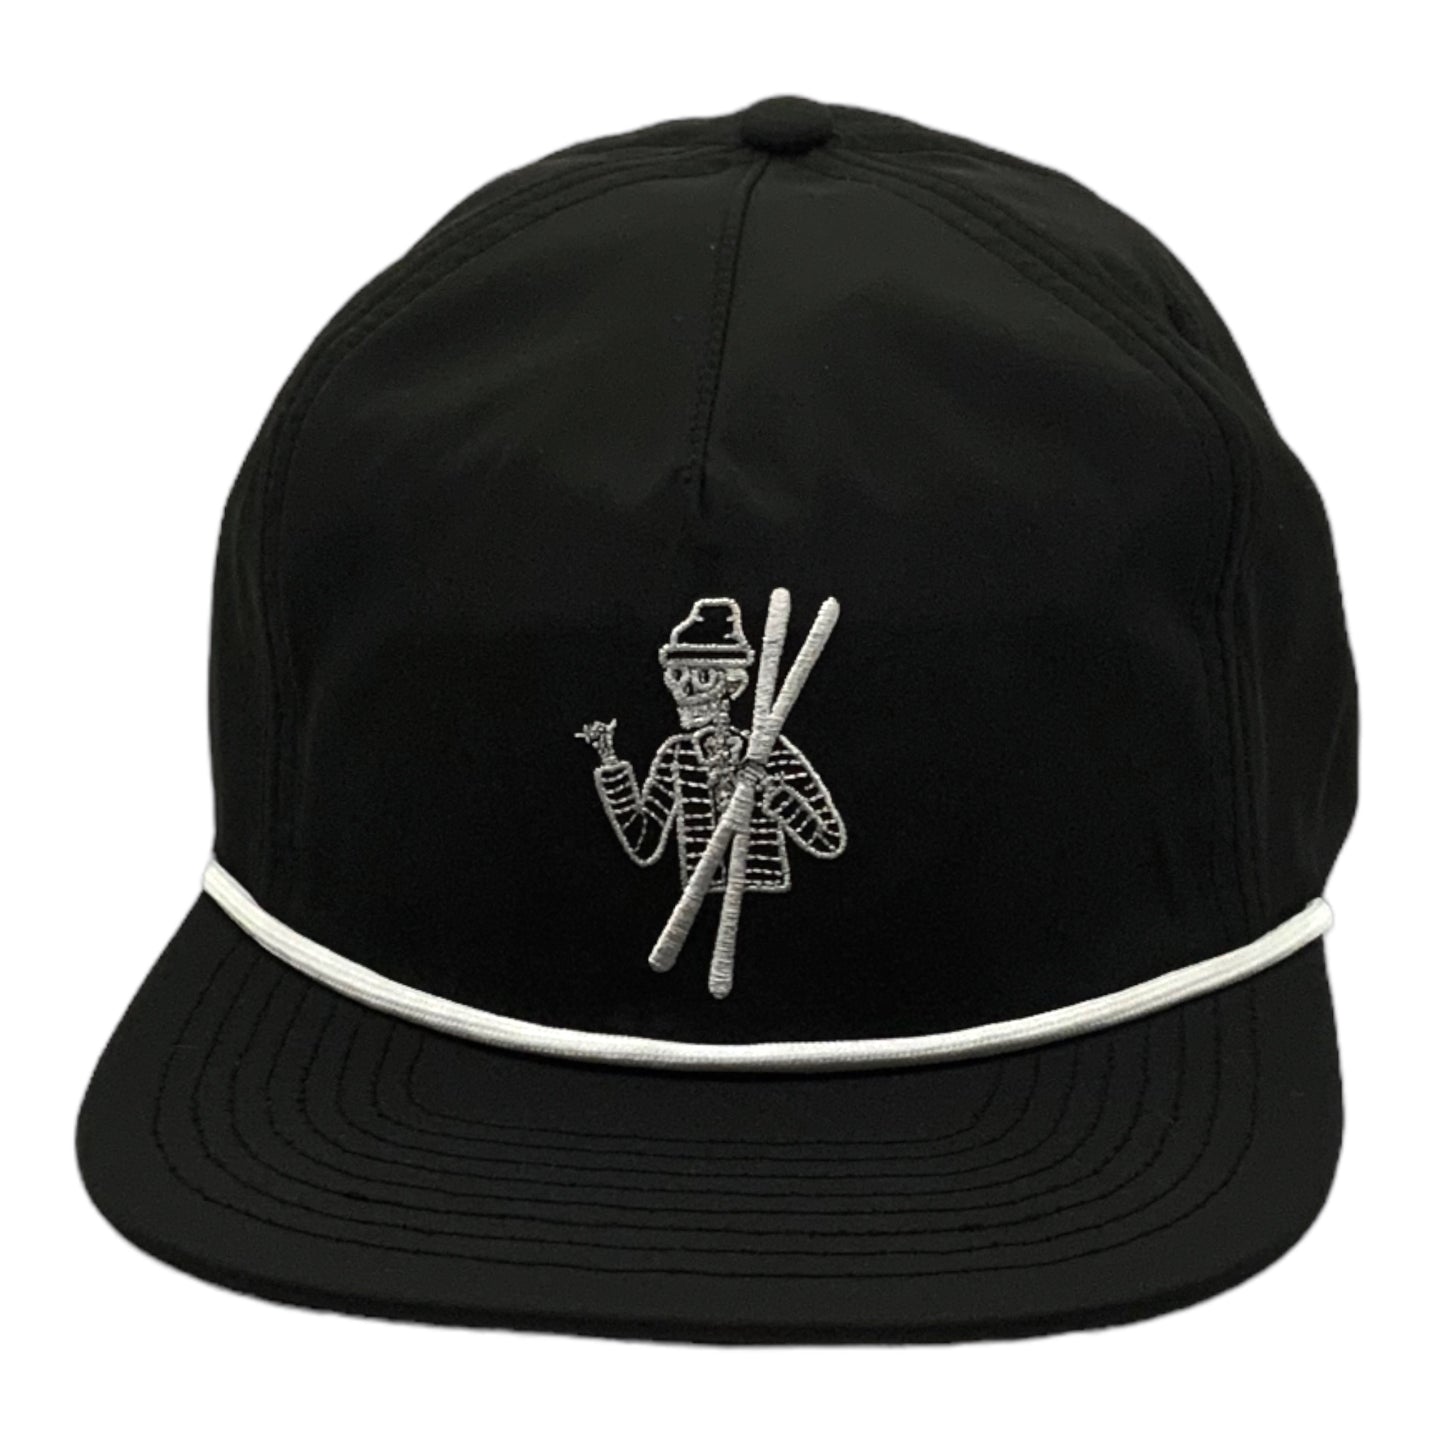 Ski Club Hat, Black